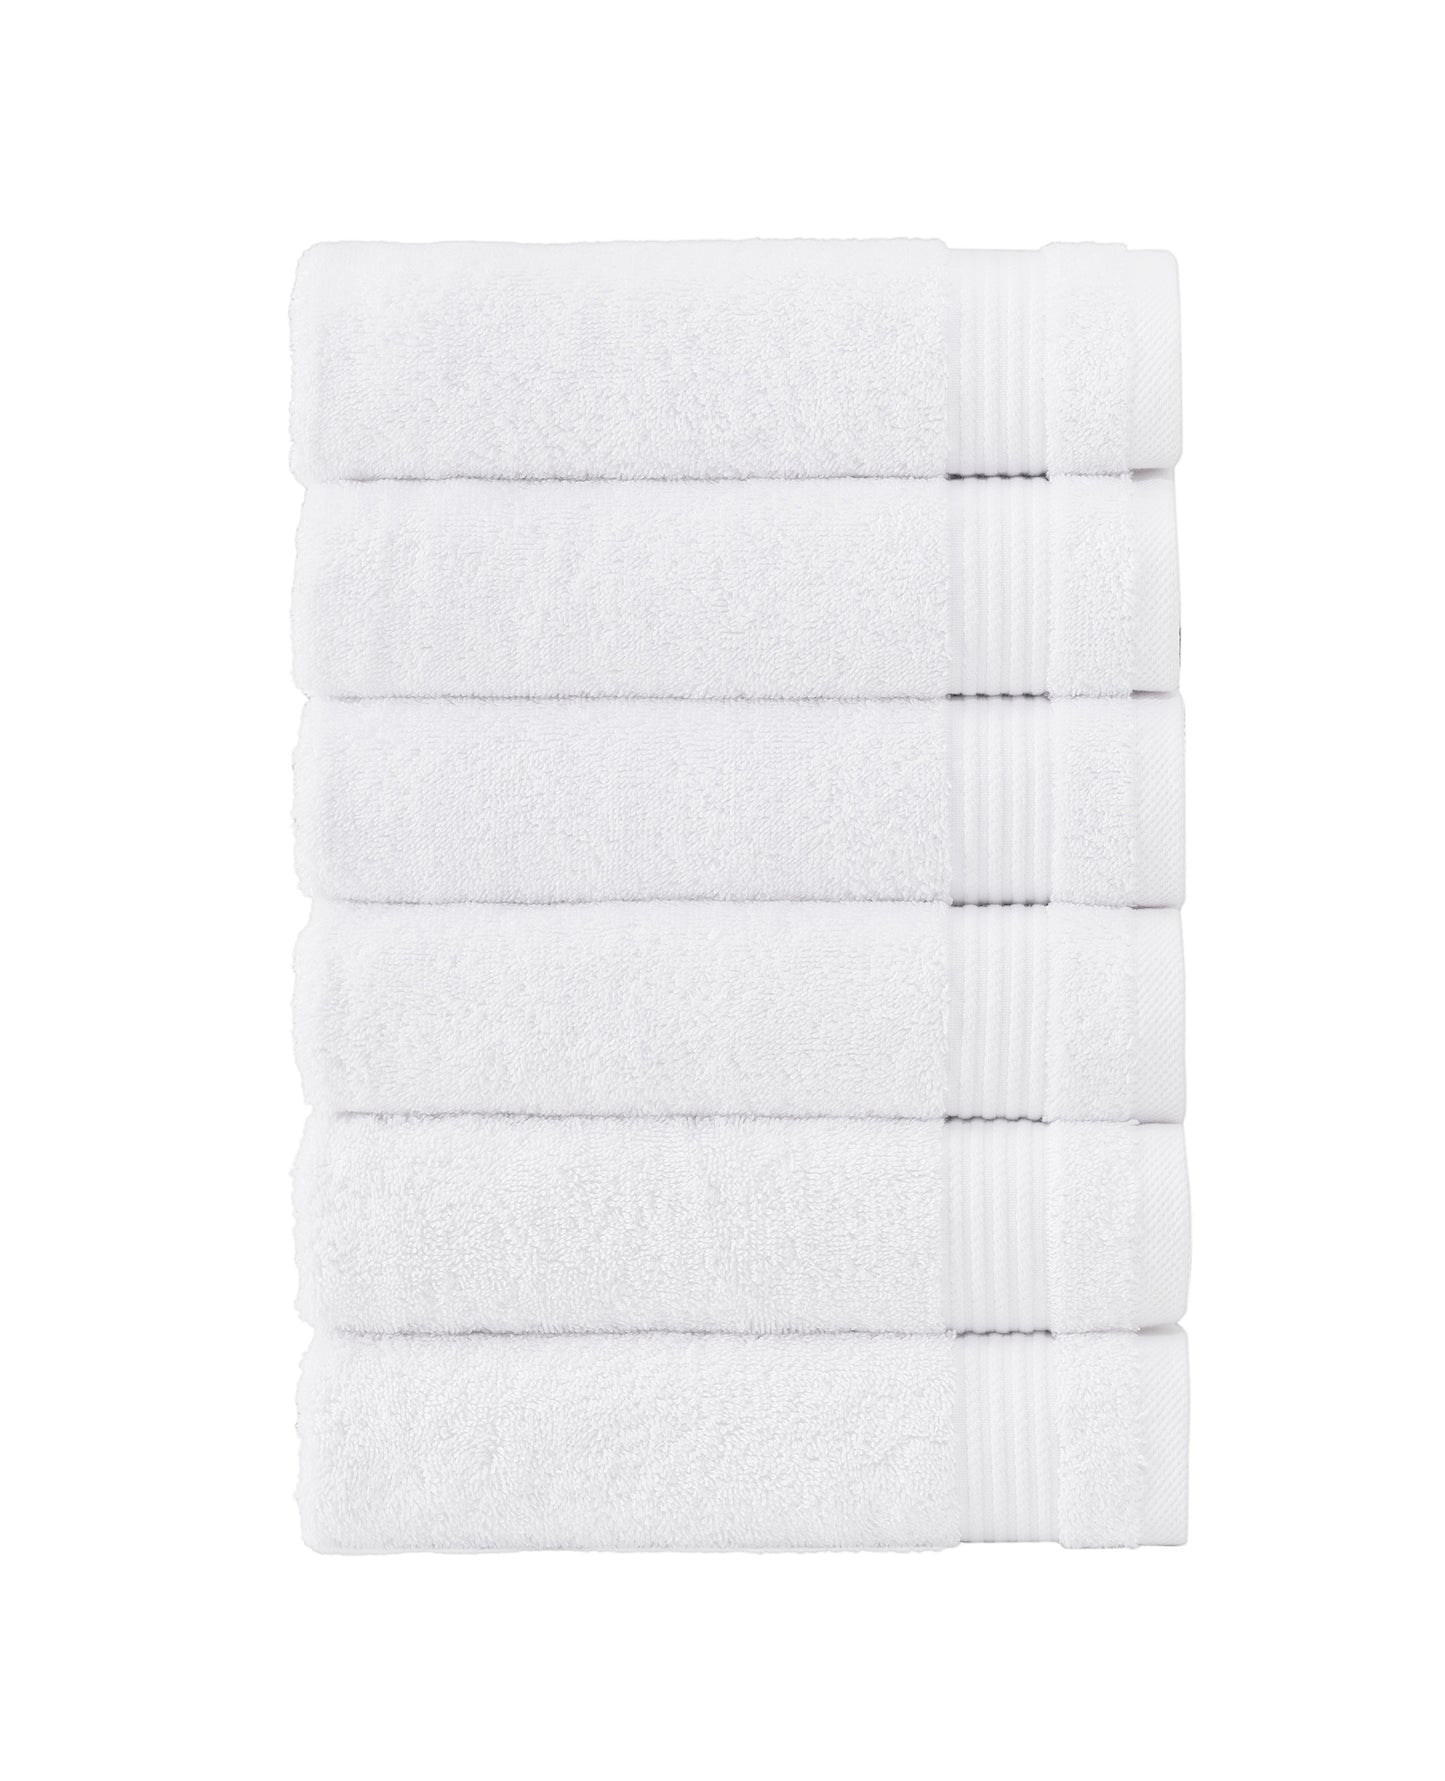 Amadeus Turkish Cotton Hand Towels Set - 6 Pieces - Classic Turkish Towels